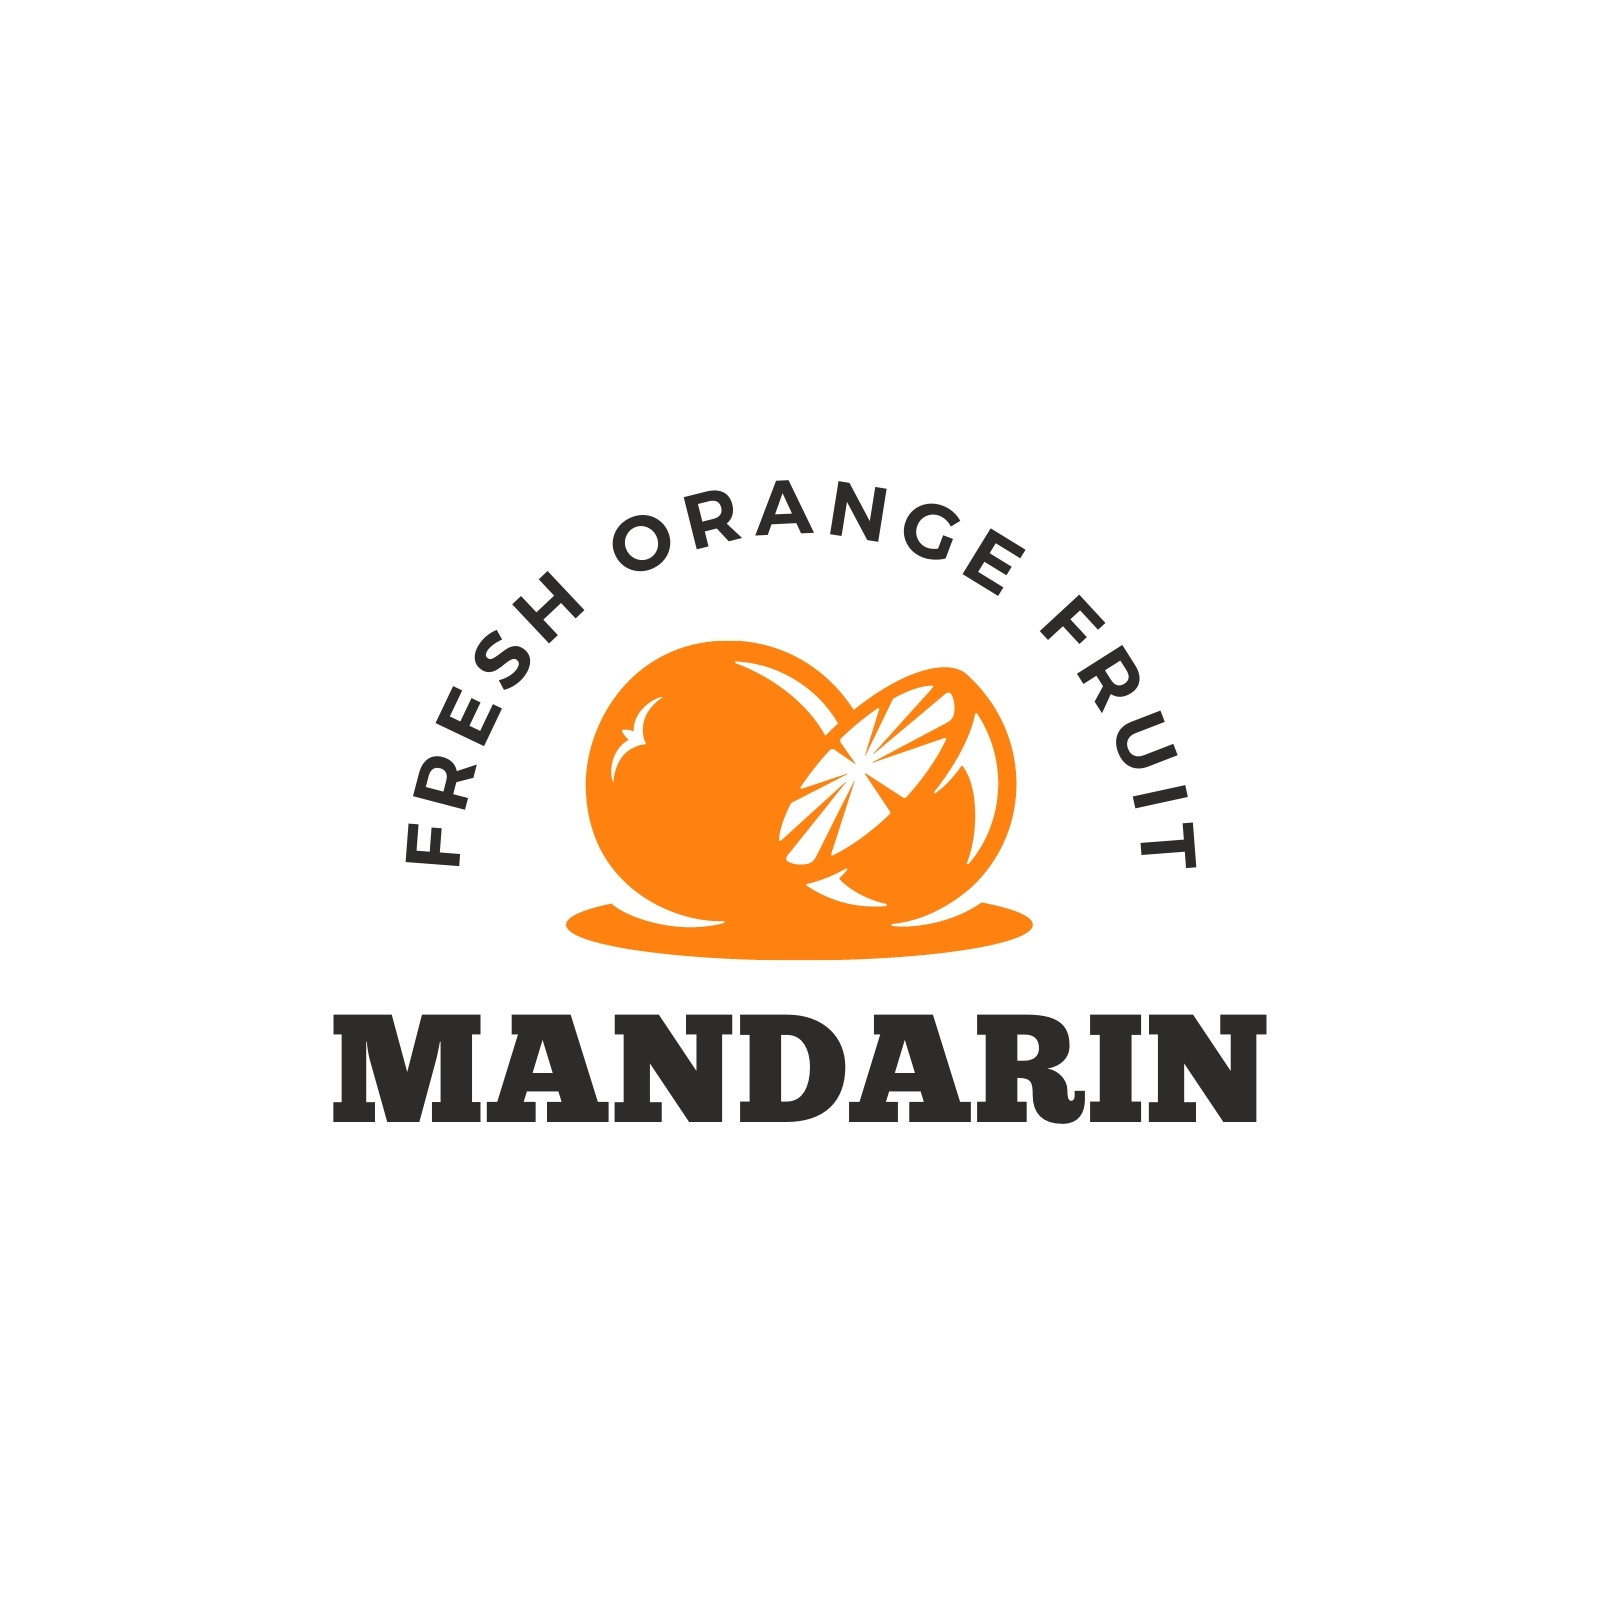 orange fruit logo